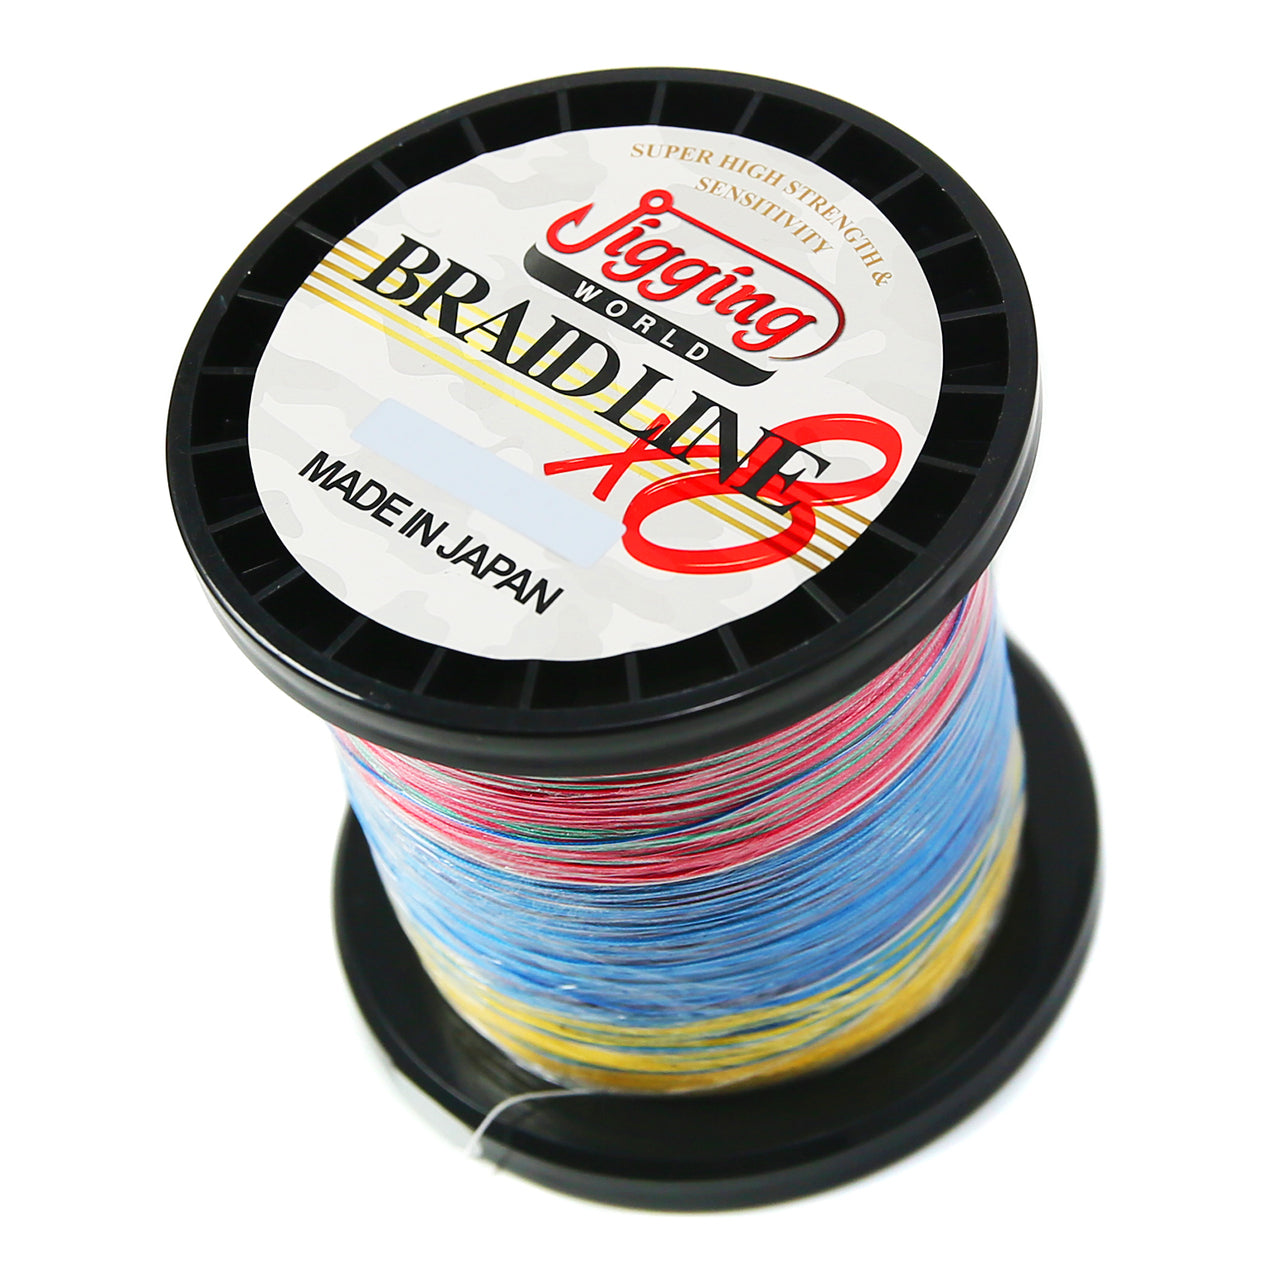 Jigging World x8 Braided Line Multicolor 600 Meter / 40 lb